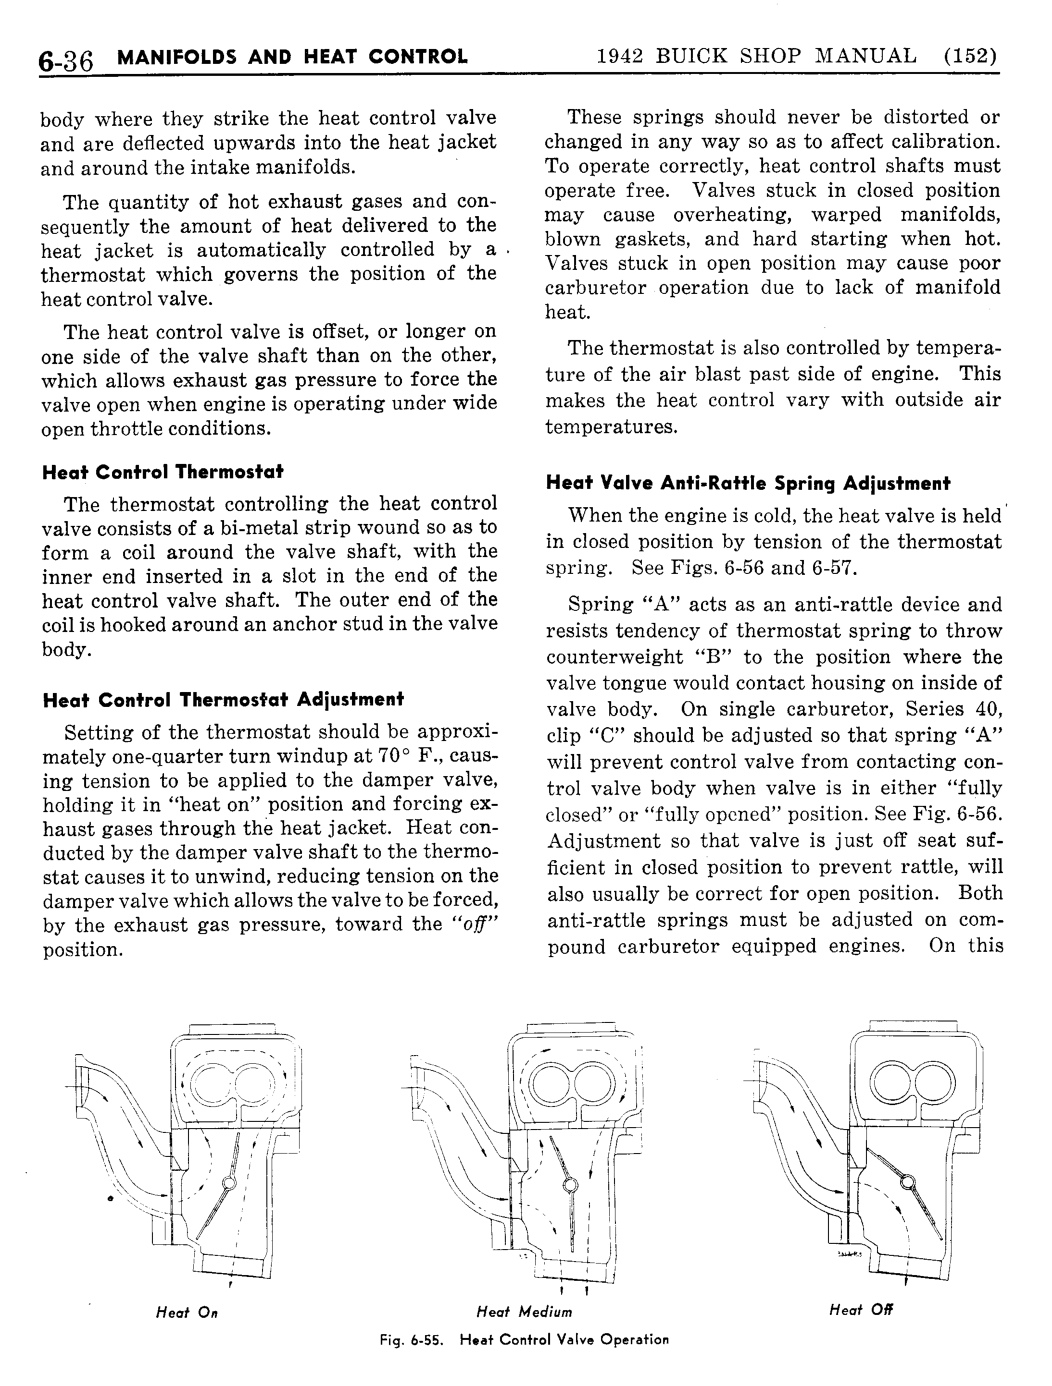 n_07 1942 Buick Shop Manual - Engine-036-036.jpg